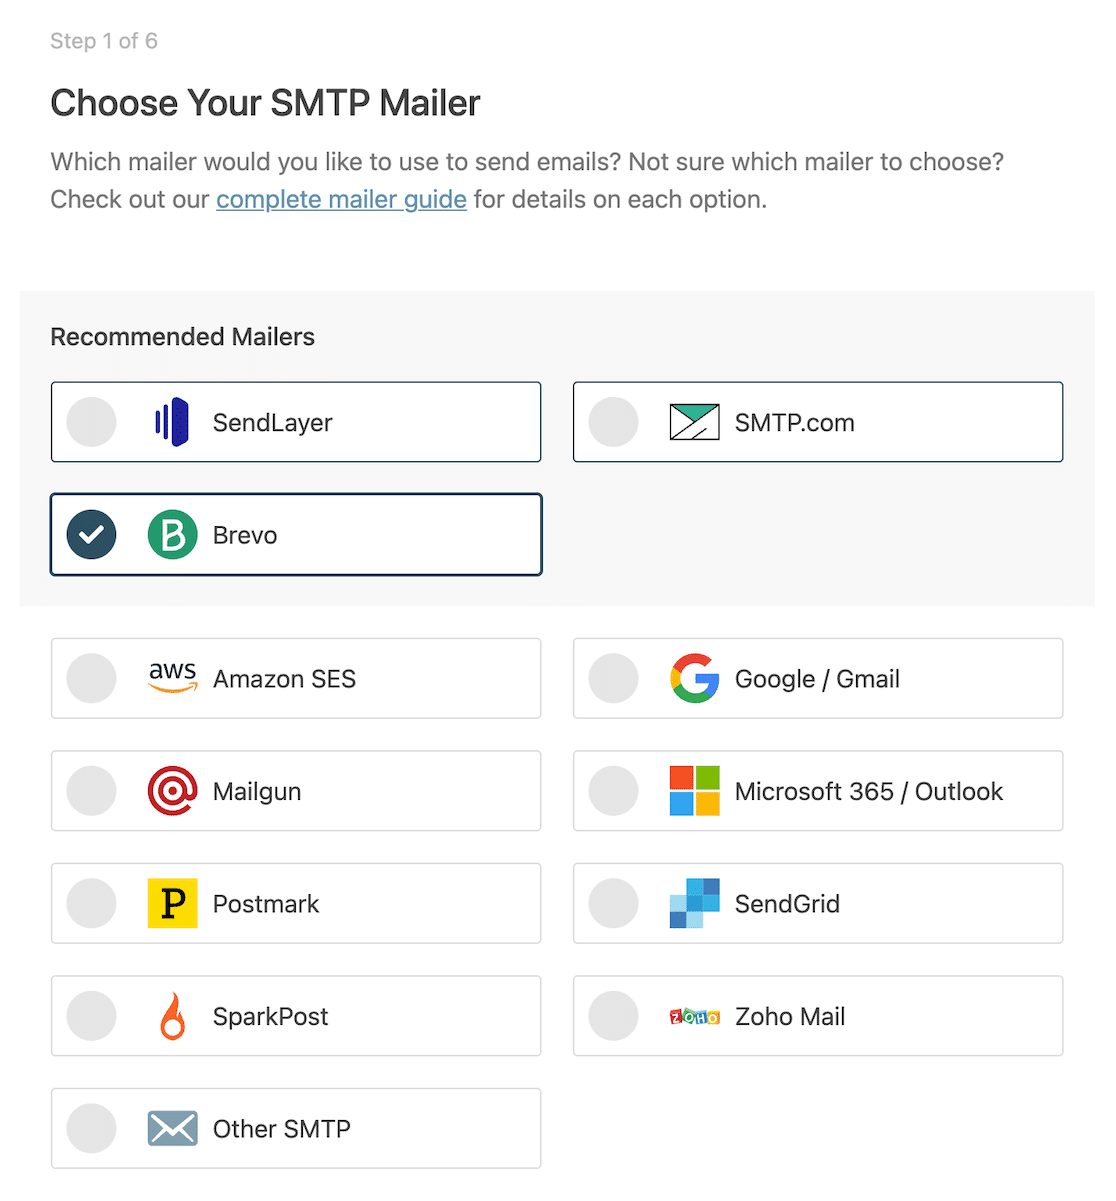 Select Brevo as your SMTP mailer